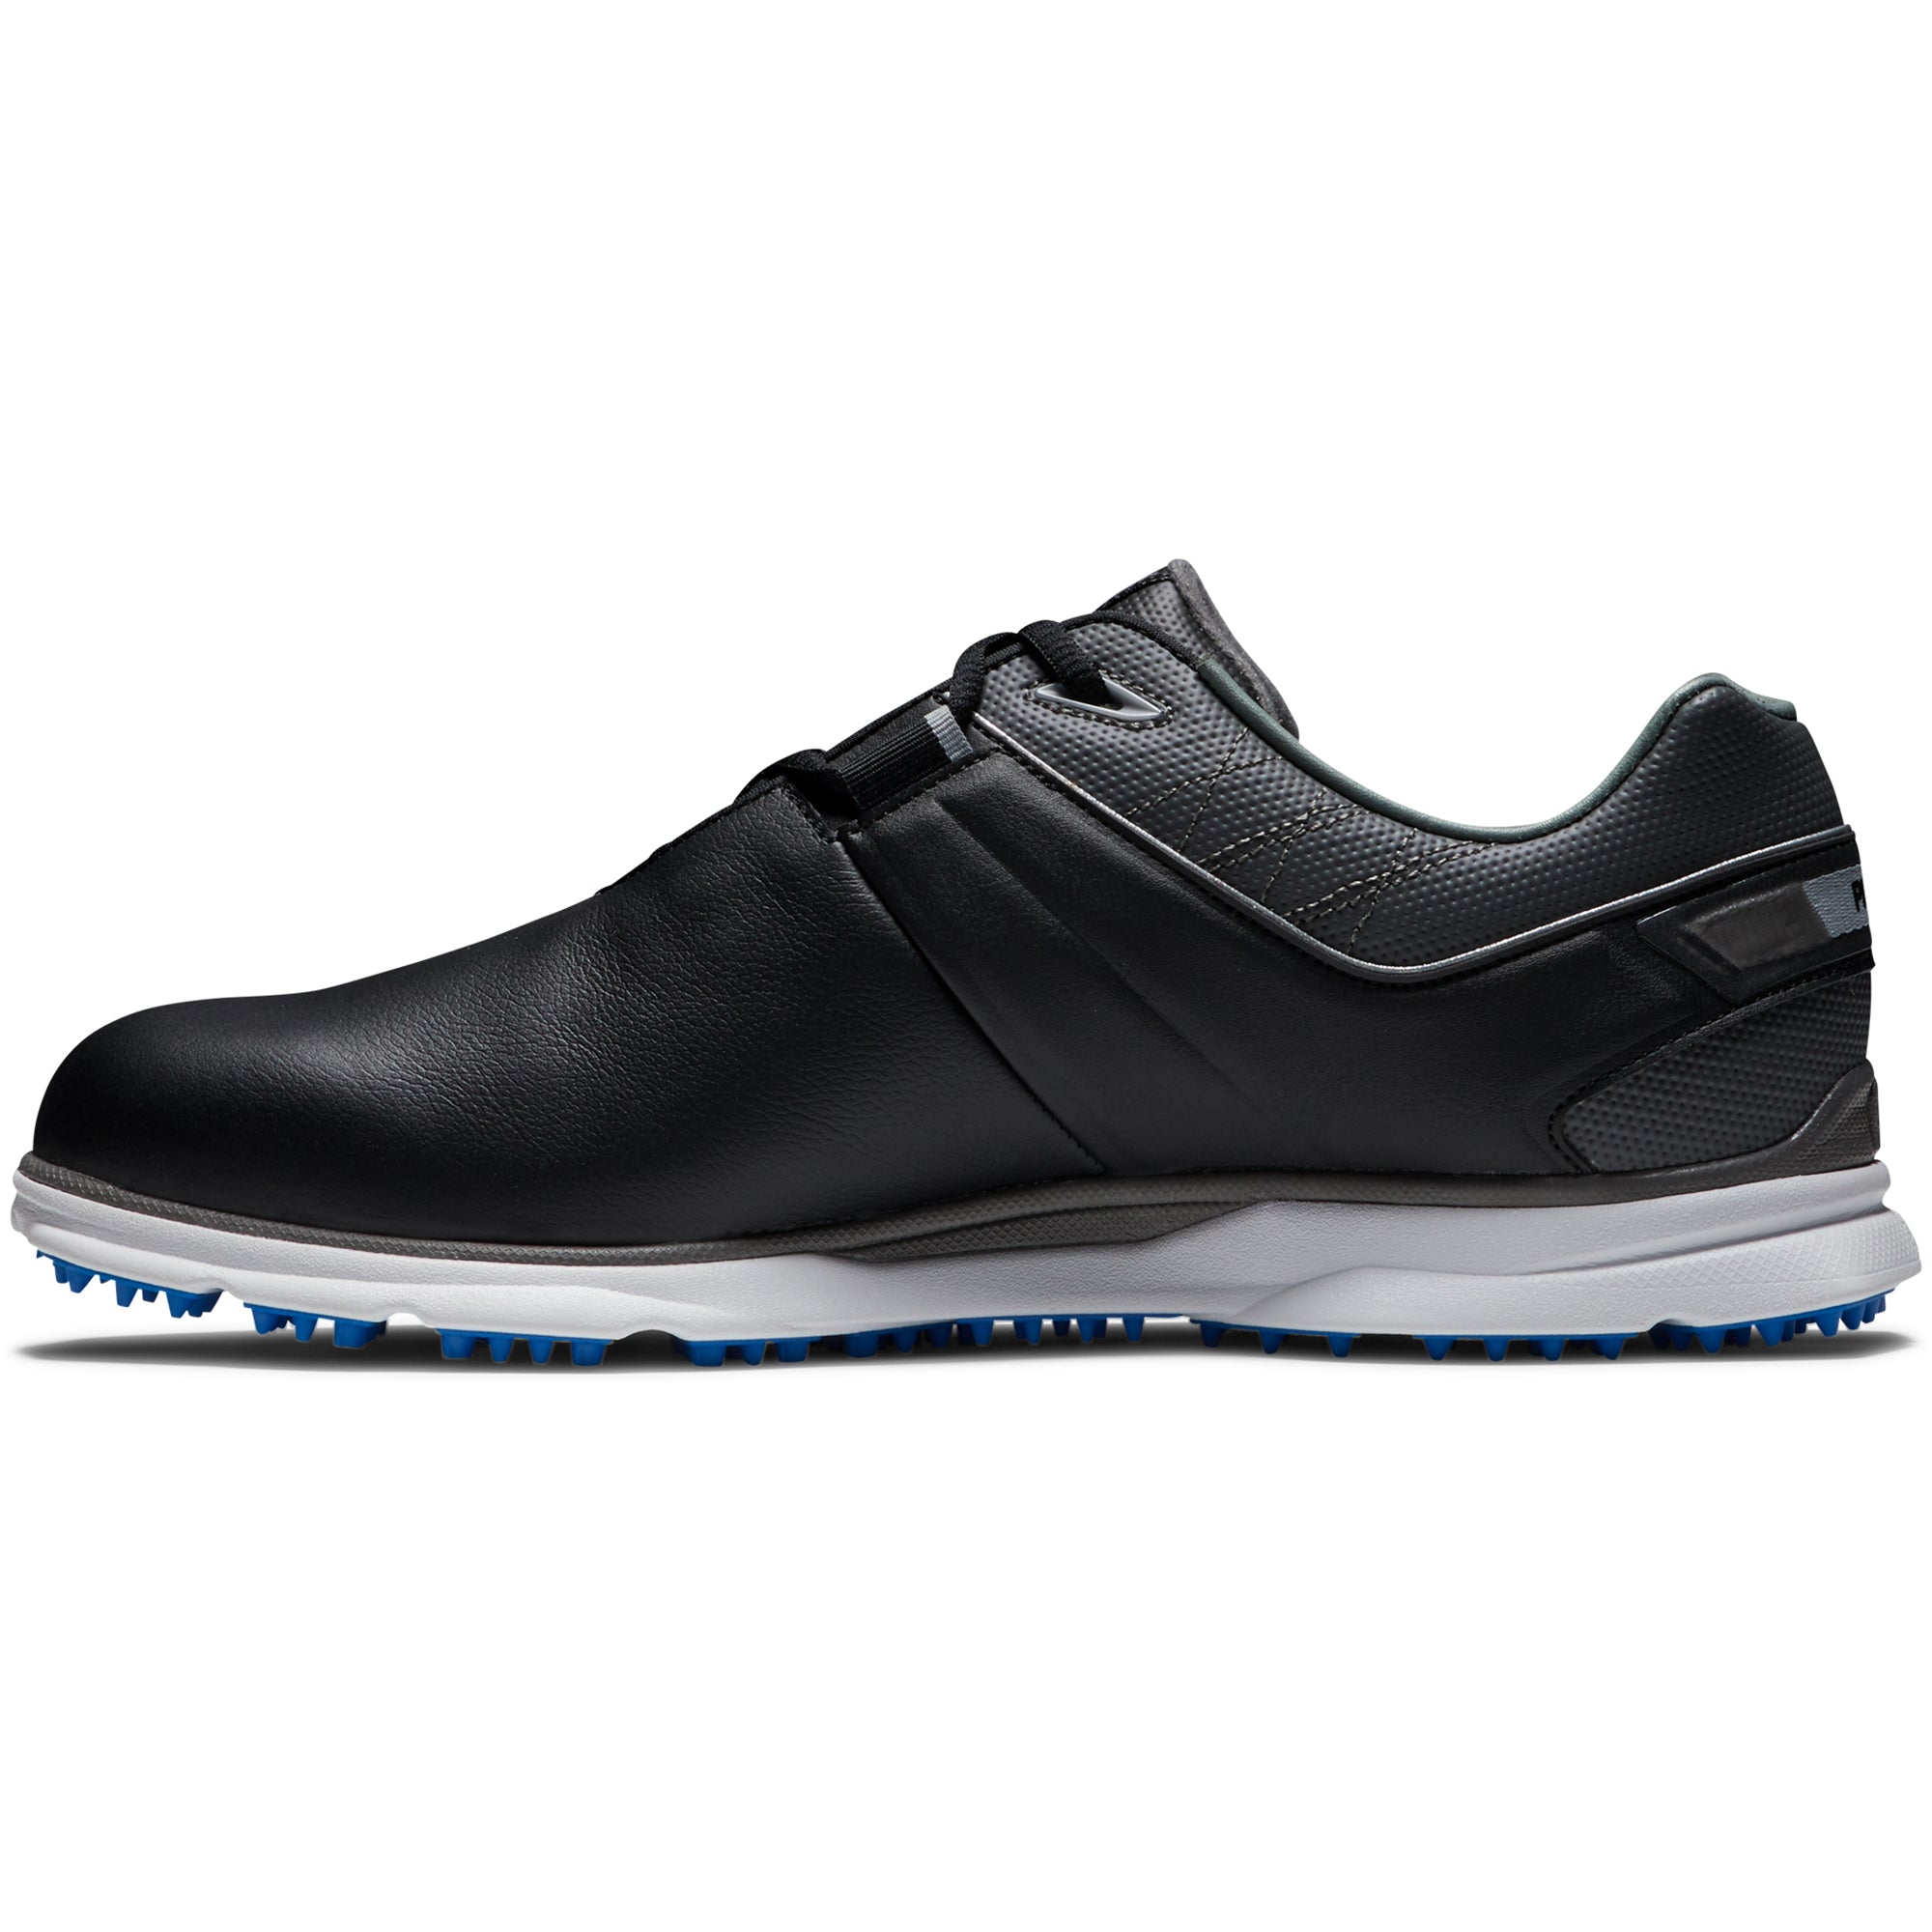 FootJoy Pro SL Golf Shoes 53077 Black Charcoal | Function18 | Restrictedgs